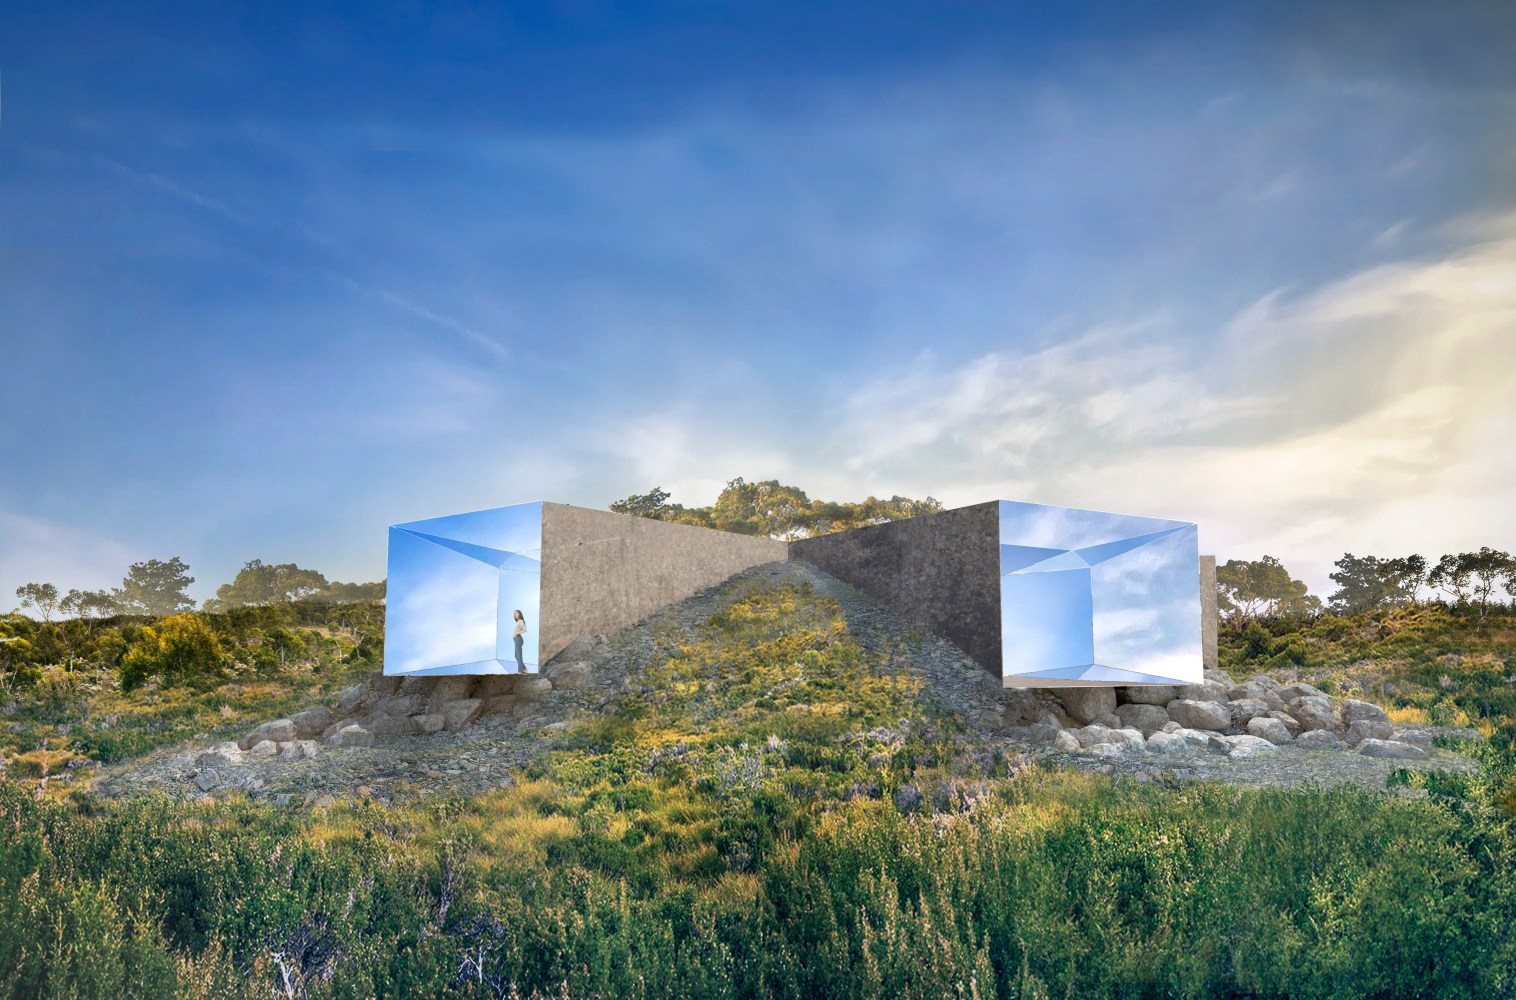 Doug Aitken,&amp;nbsp;TRANSFORMER, currently&amp;nbsp;scheduled to open 2022

Installation rendering: Tasmania

&amp;nbsp;

INQUIRE





